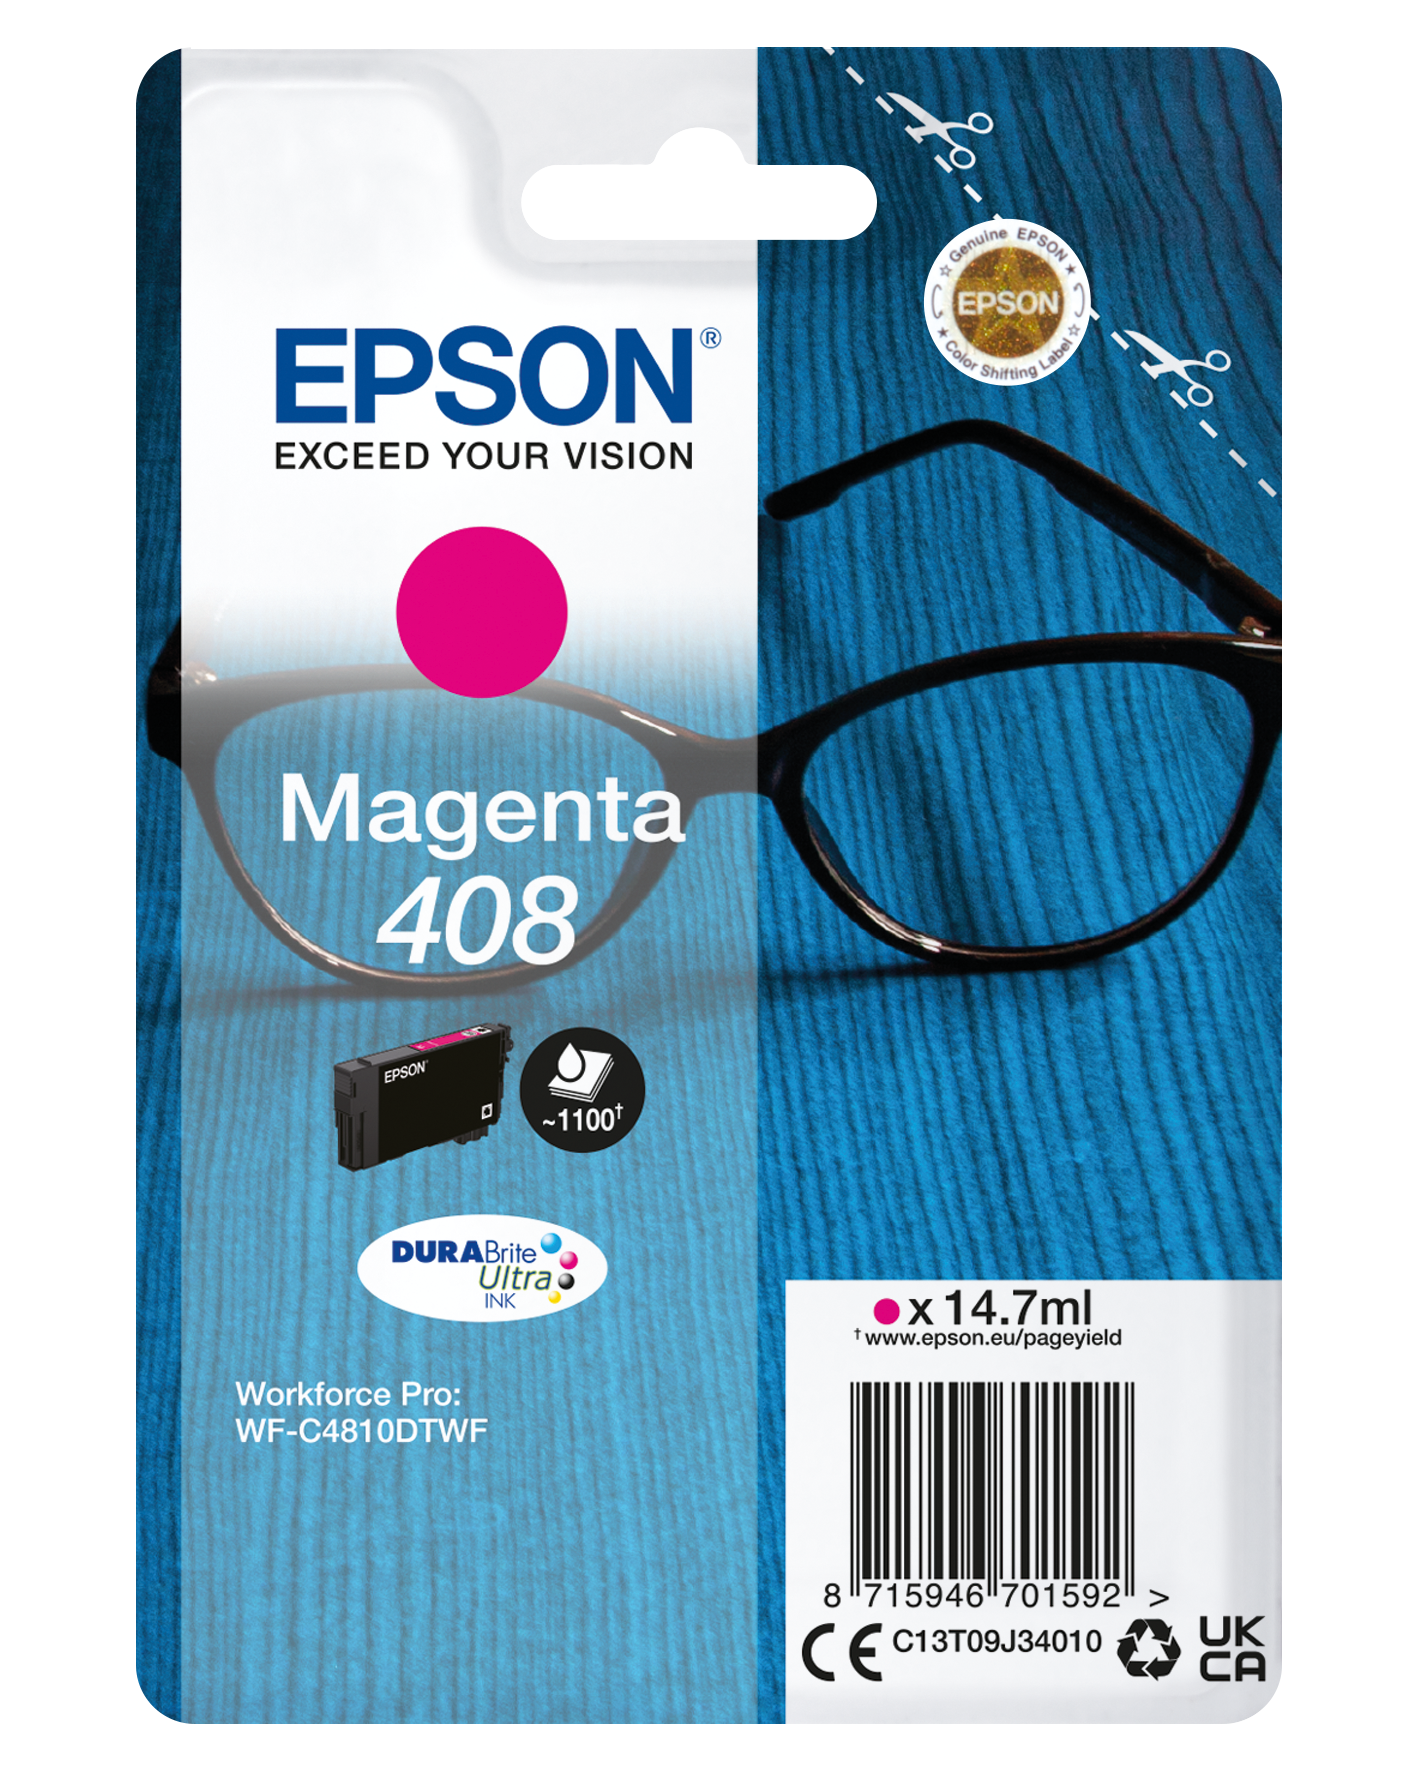 Epson Singlepack Magenta 408 DURABrite Ultra Ink single pack / magenta